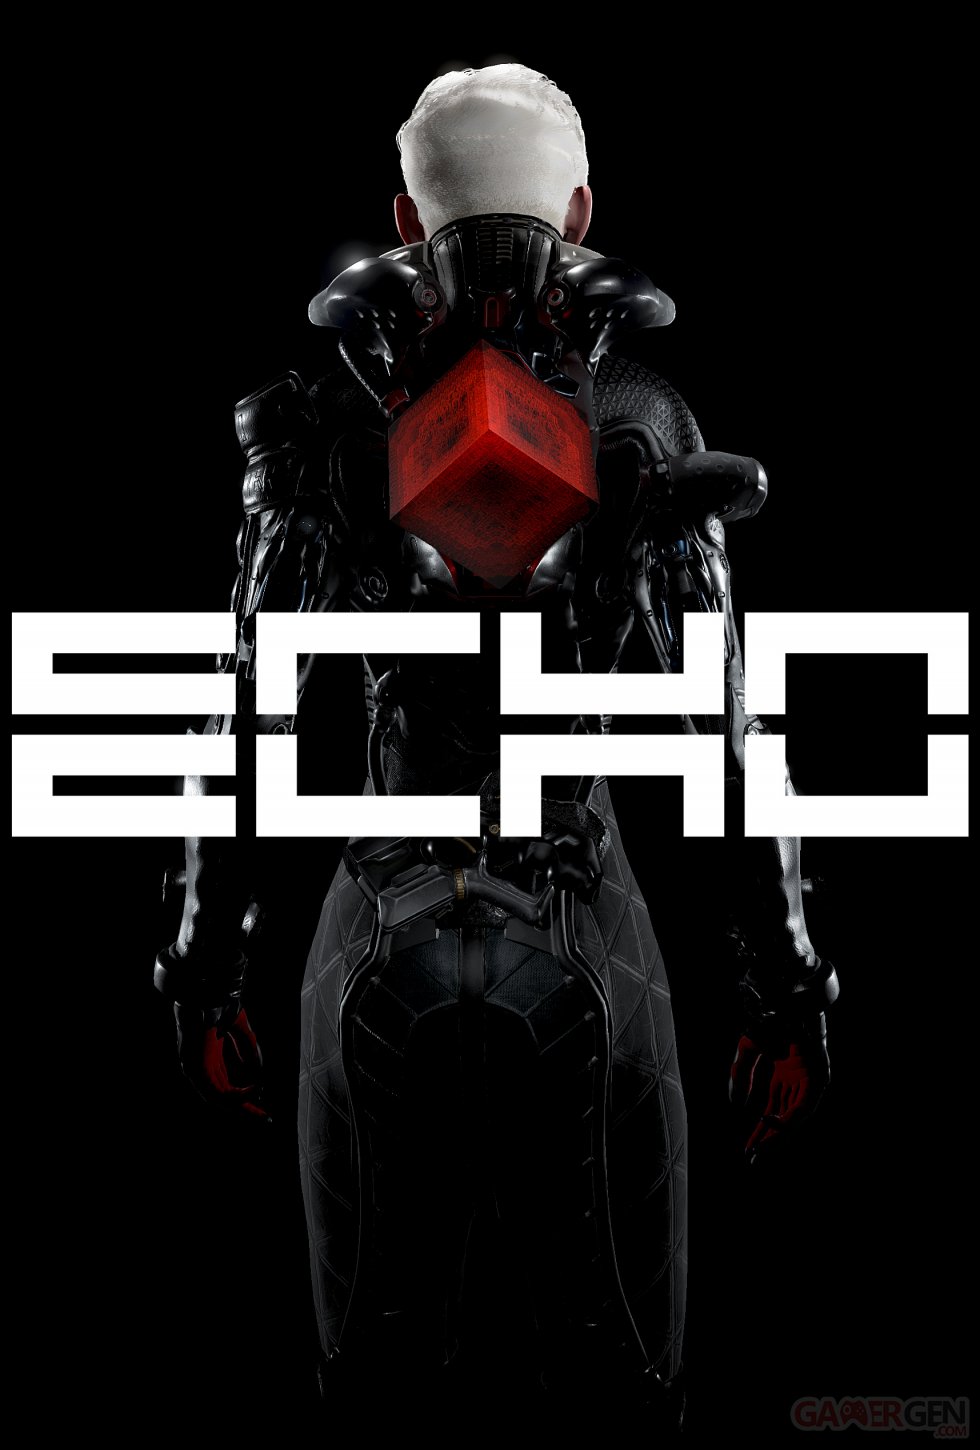 ECHO_KeyArt_w_Logo